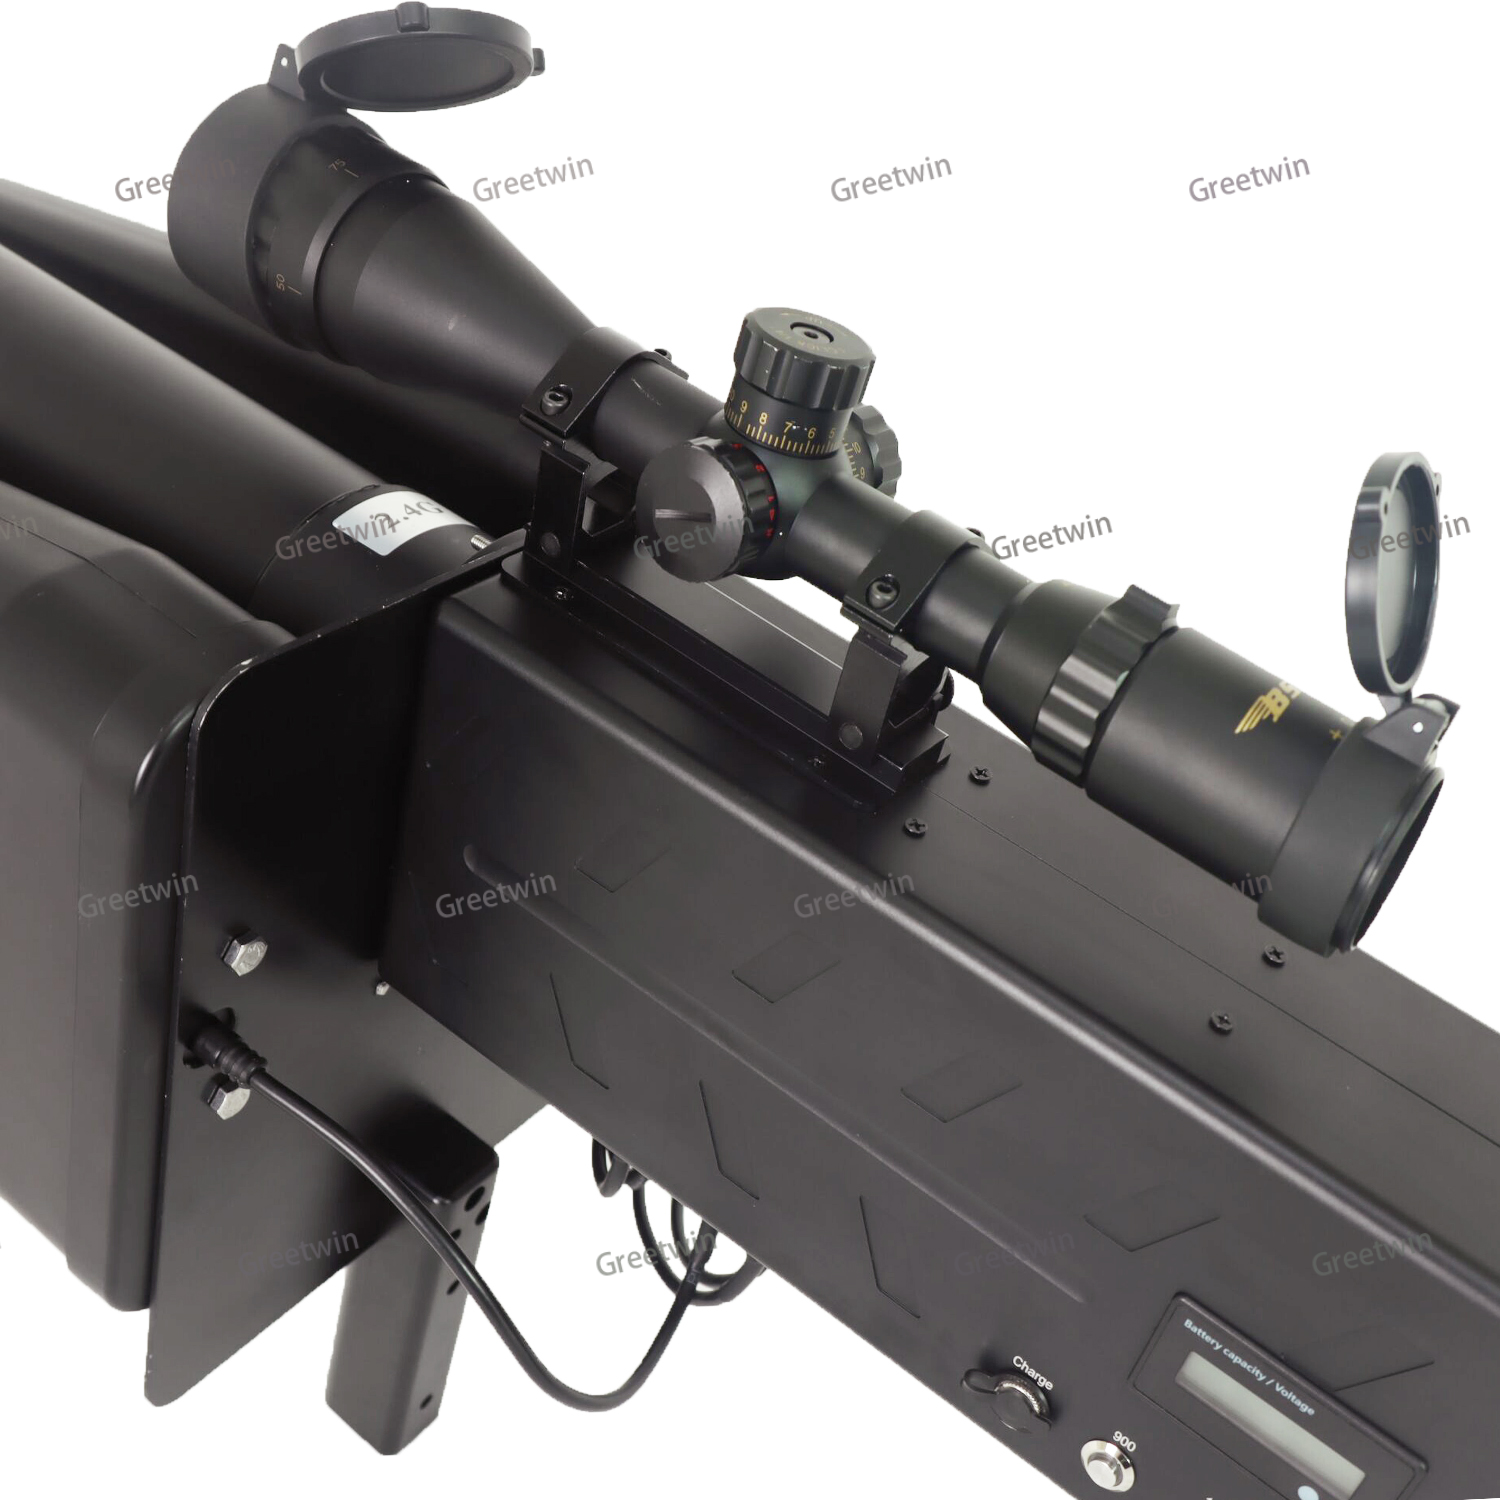 2KM Long distance signal jammer gun for anti drone